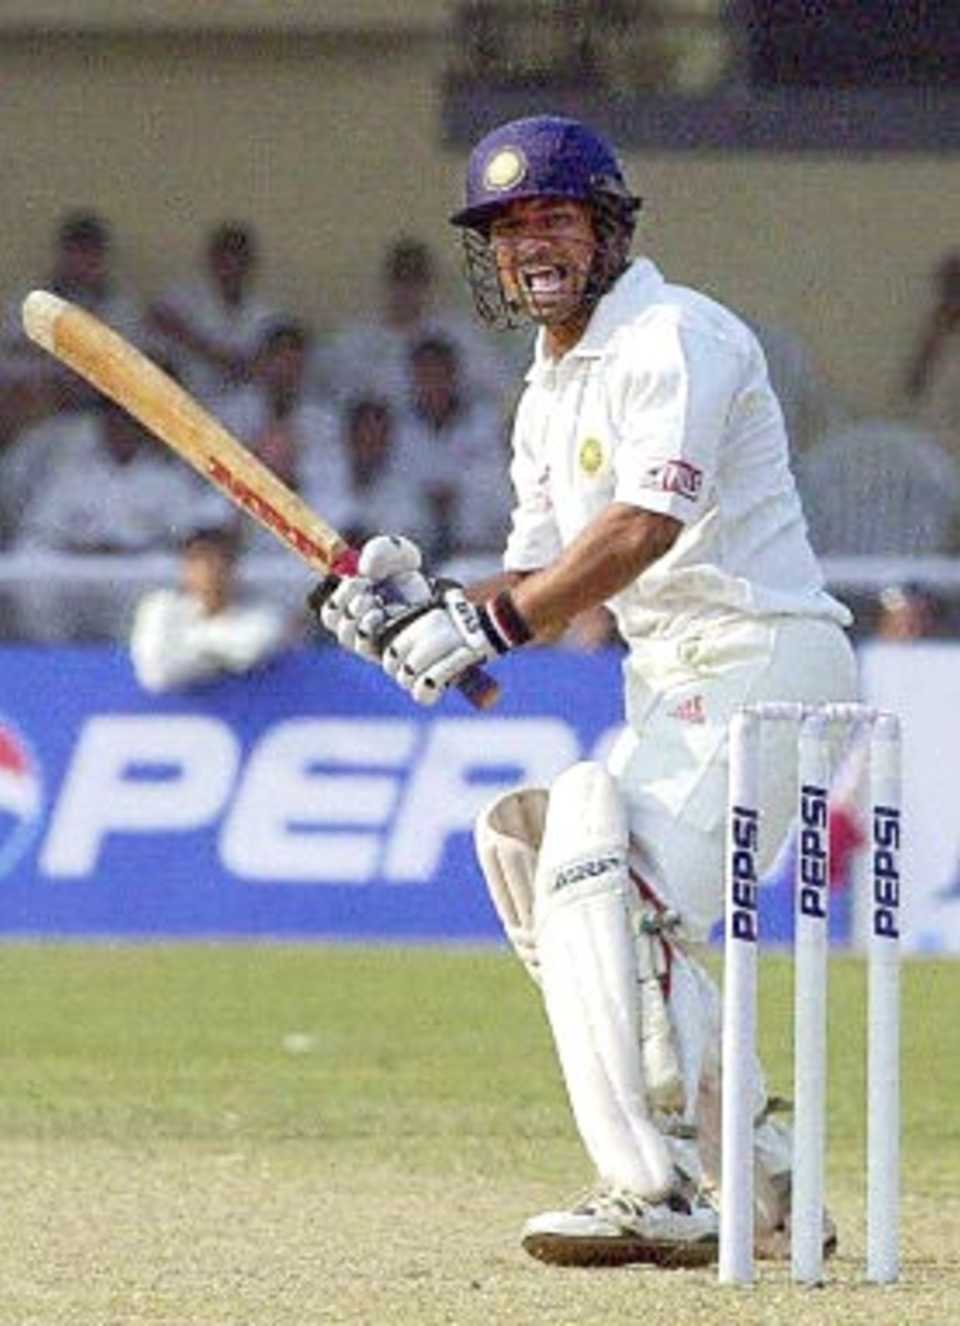 Indian star batsman Sachin Tendulkar shouts after hitting a boundary off Zimbabwean bowler Travis Friend during the fourth one-day international cricket match in Kanpur, 11 December 2000. Tendulkar scored 62 runs. India won the match by nine wickets to take the series 3-1.